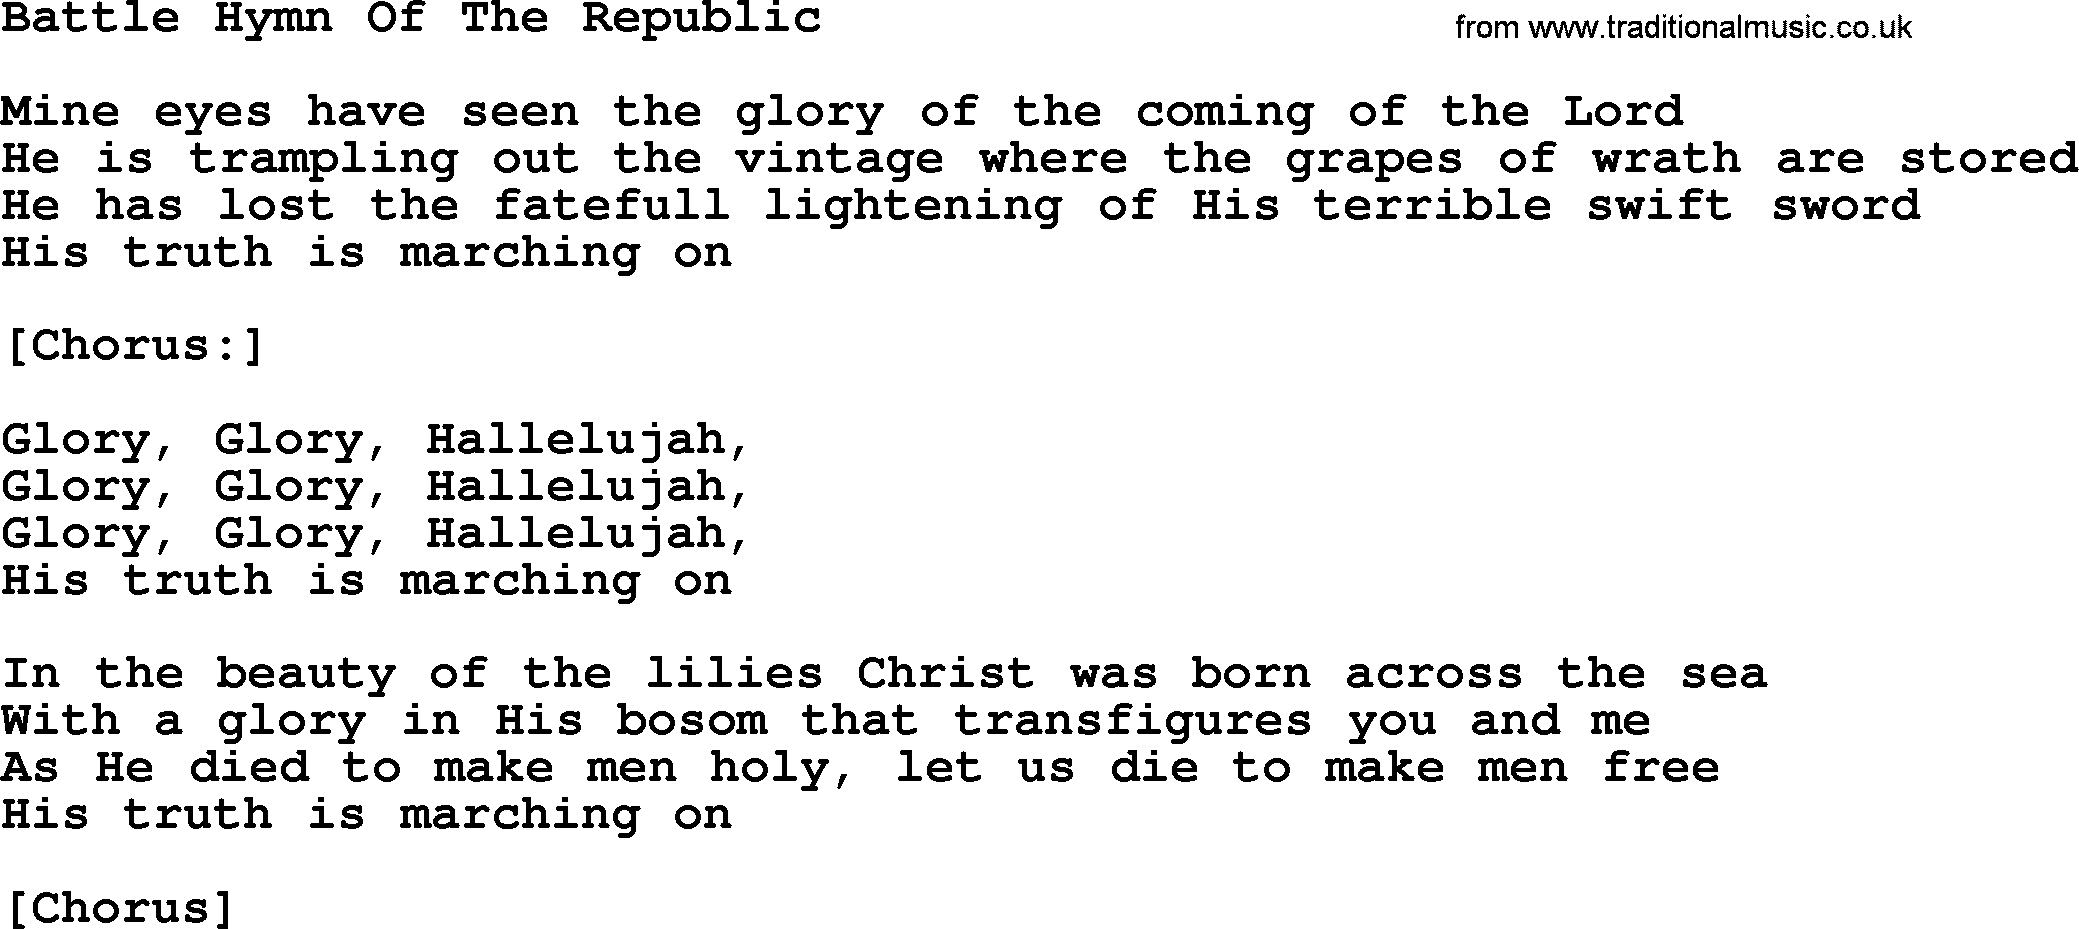 Joan Baez song Battle Hymn Of The Republic, lyrics